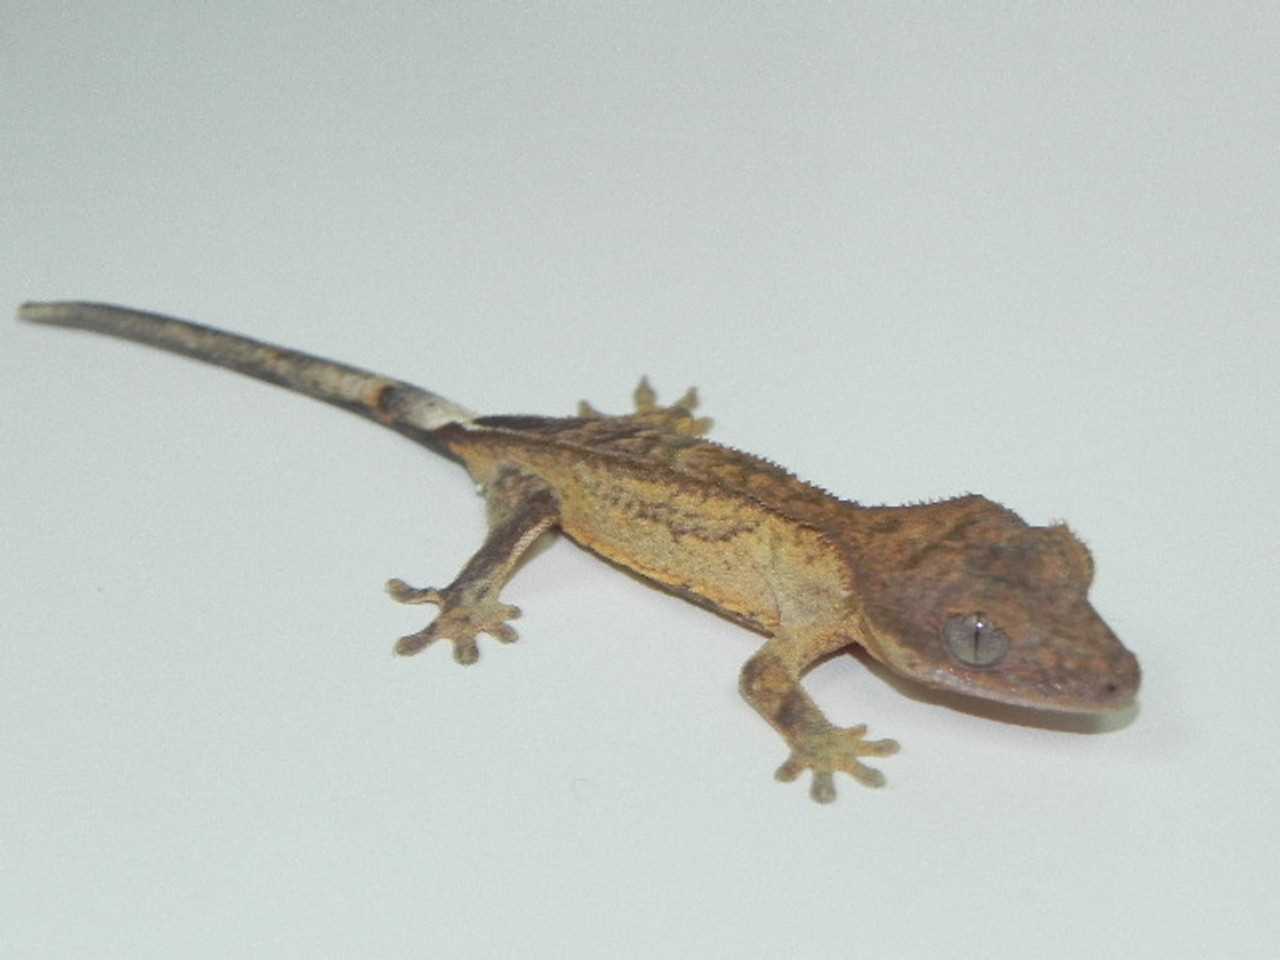 Crested gecko for sale under $50